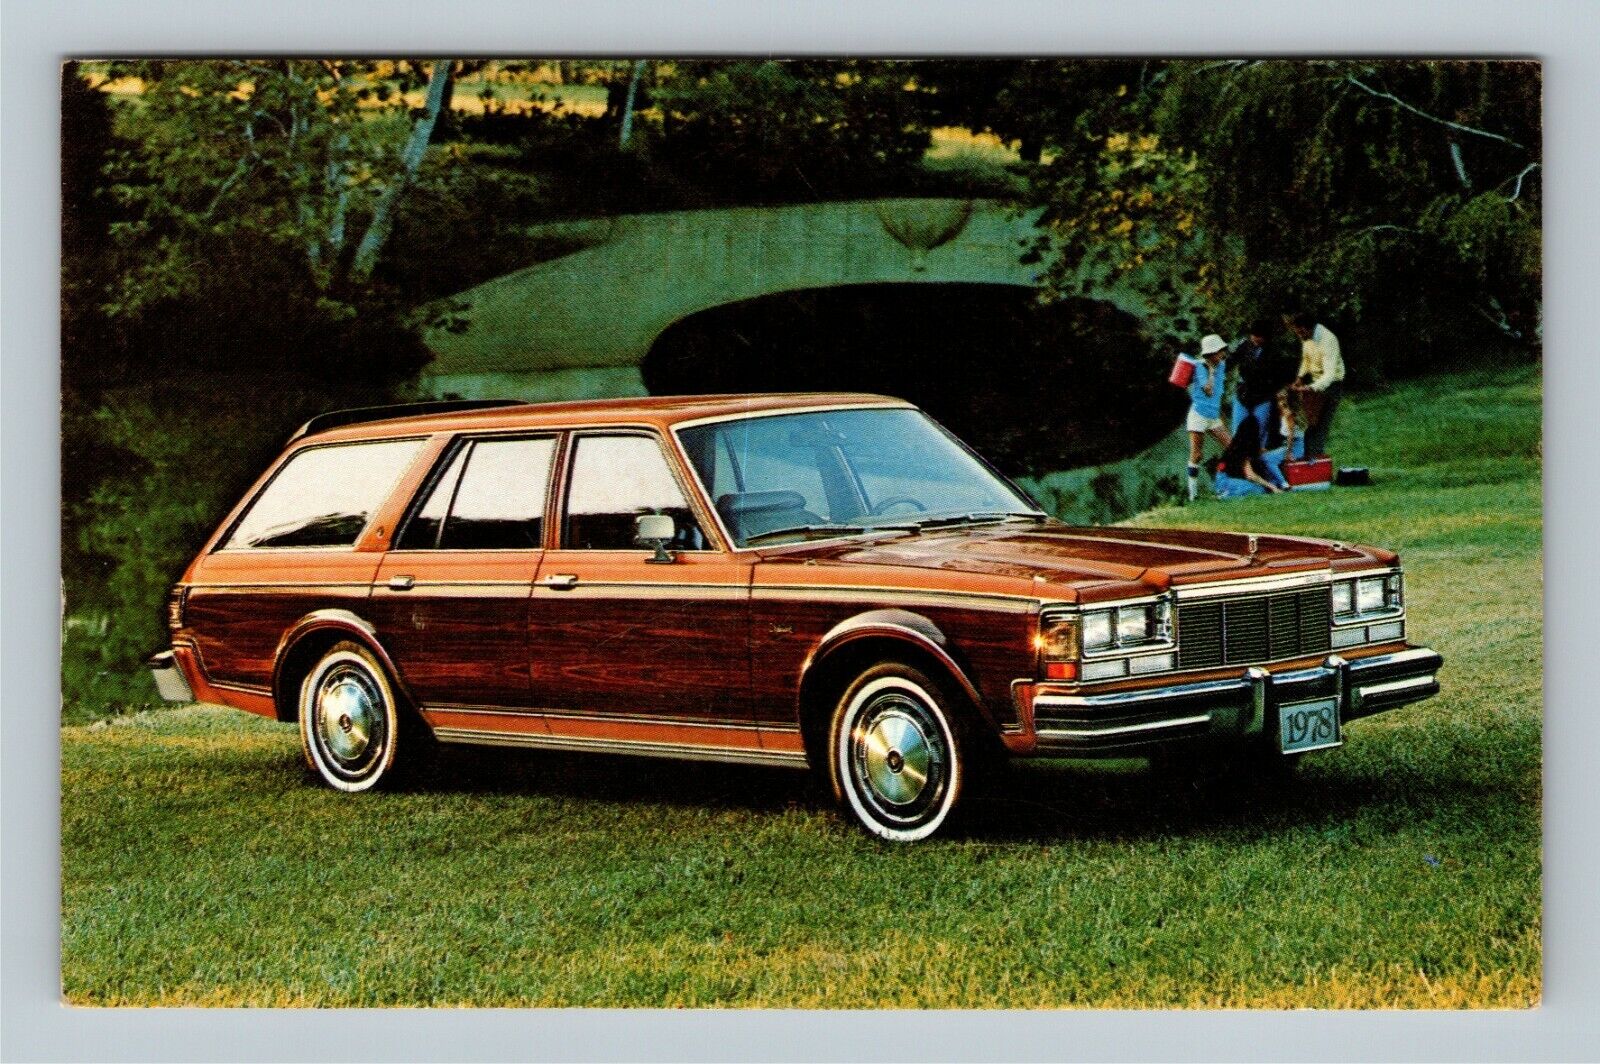 Automobile-1978 Dodge Diplomat Wagon, Wood Panels, Vintage Postcard